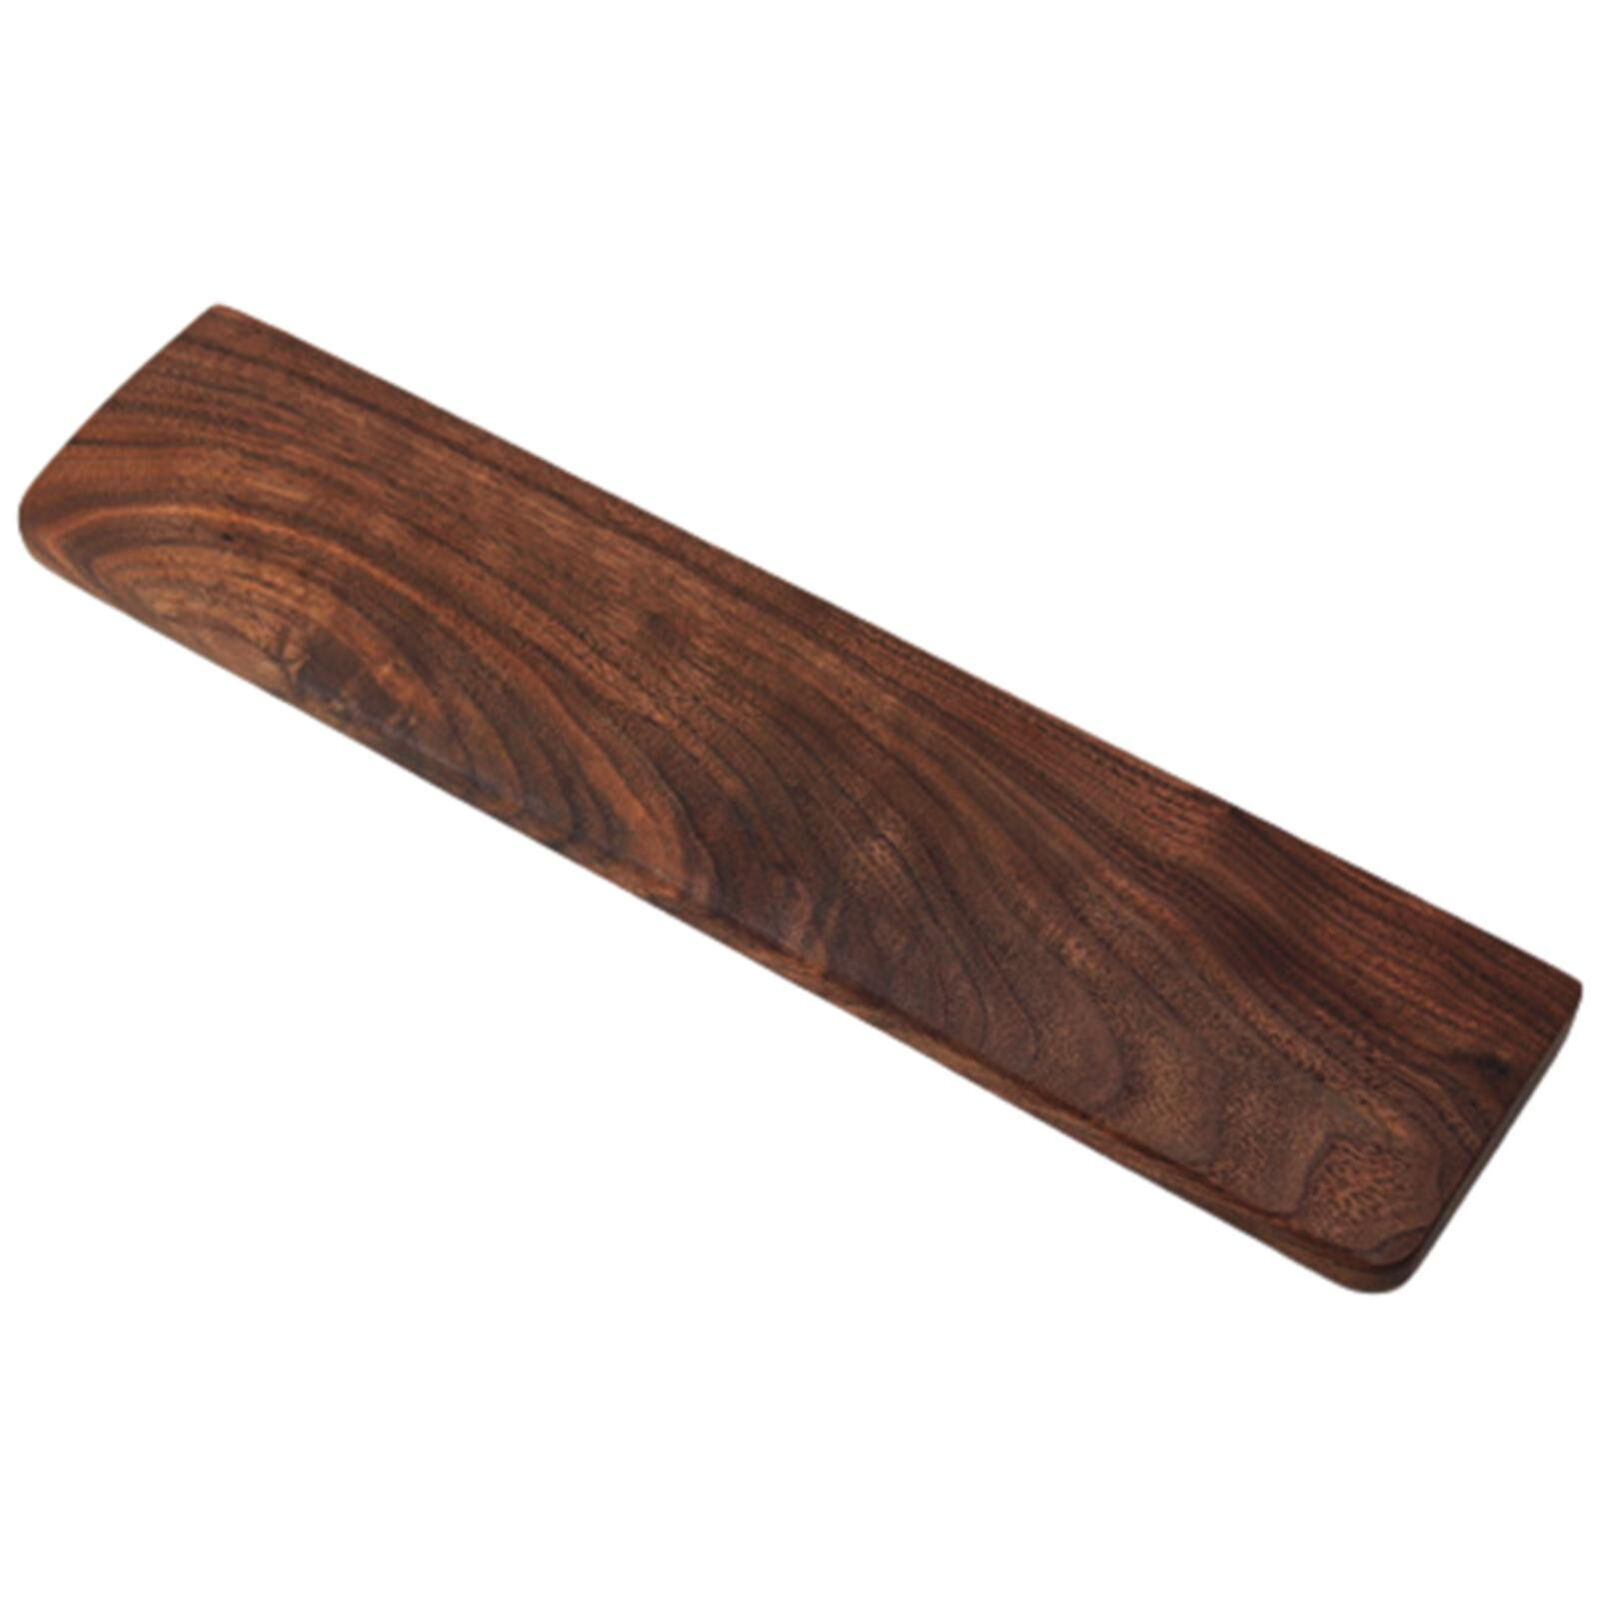 Keyboard Wooden Palm Rest Wood Pad Wrist Rest Support Wood Pad Wrist Rest 